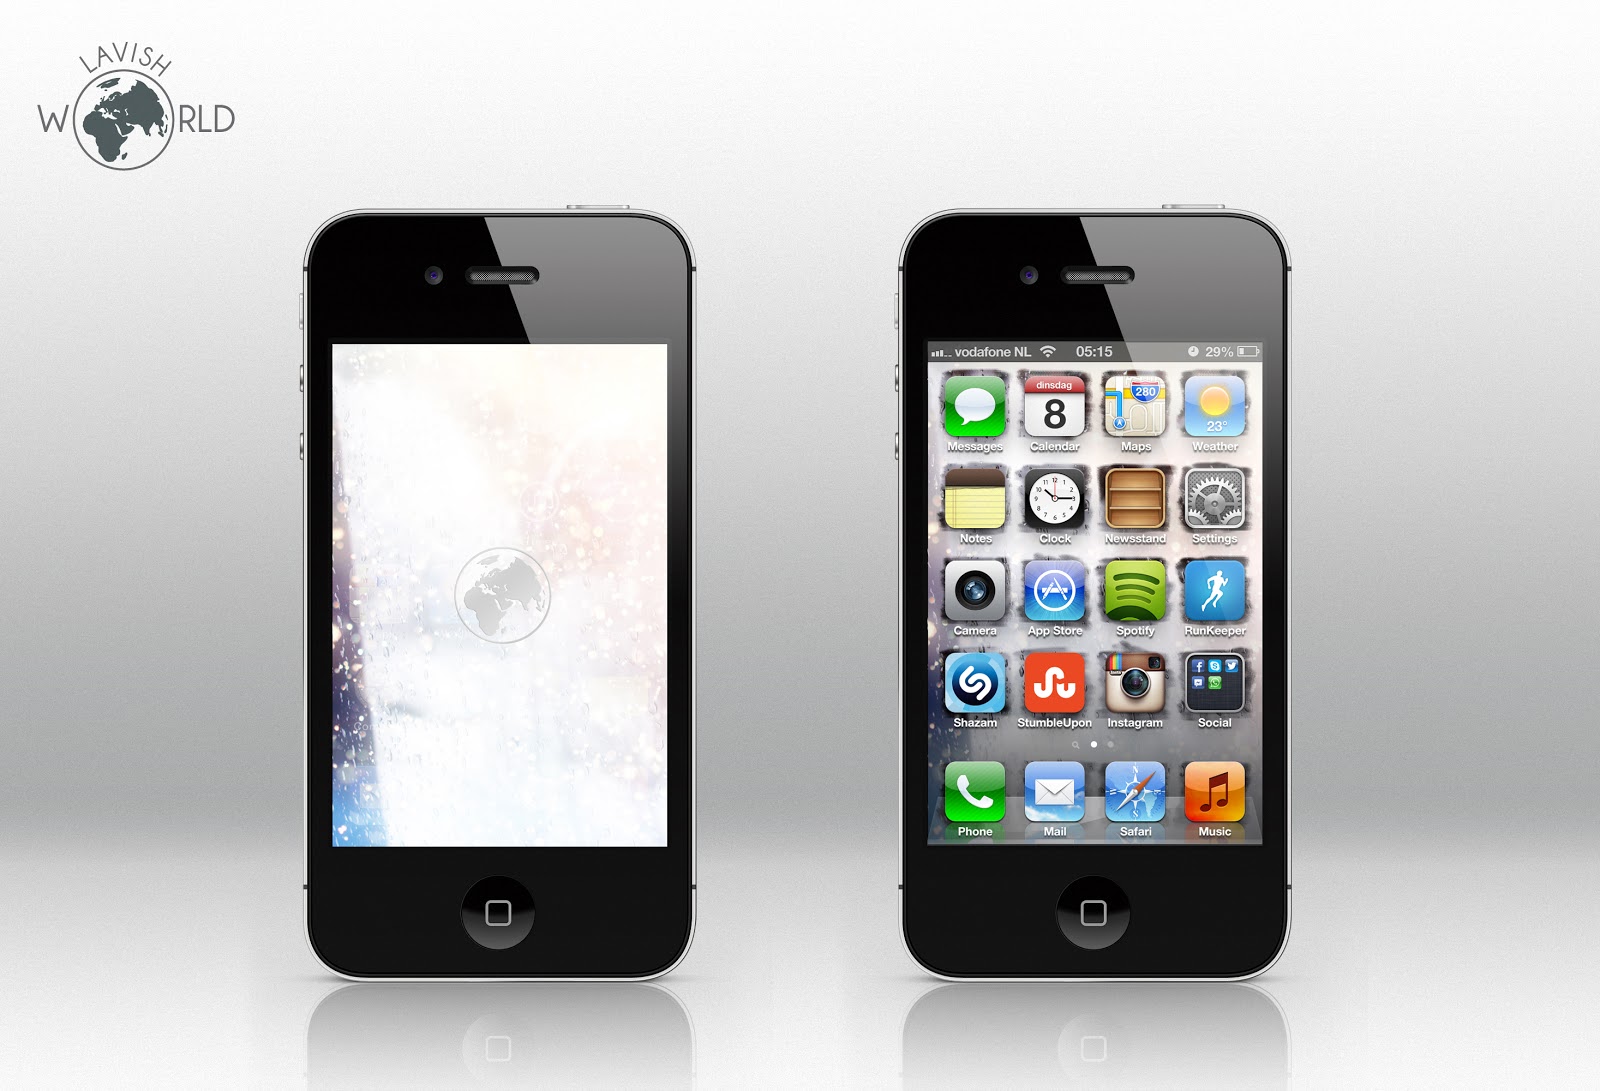 The Lavish World Wallpaper for iPhone 4S / 5 / Android | The Lavish ...